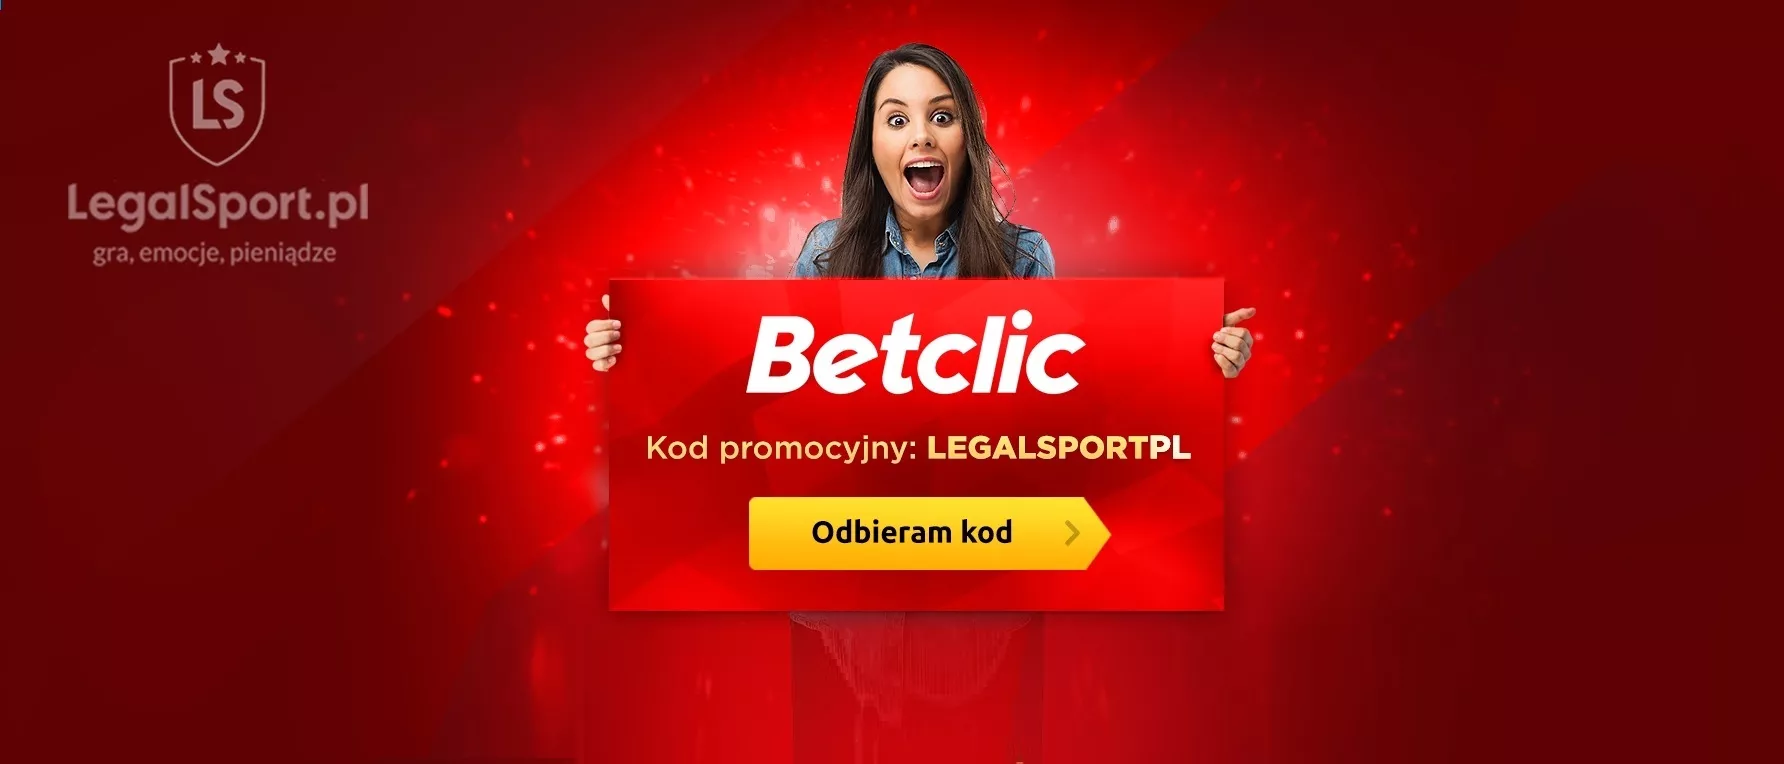 Kod promocyjny do bonusu Betclic